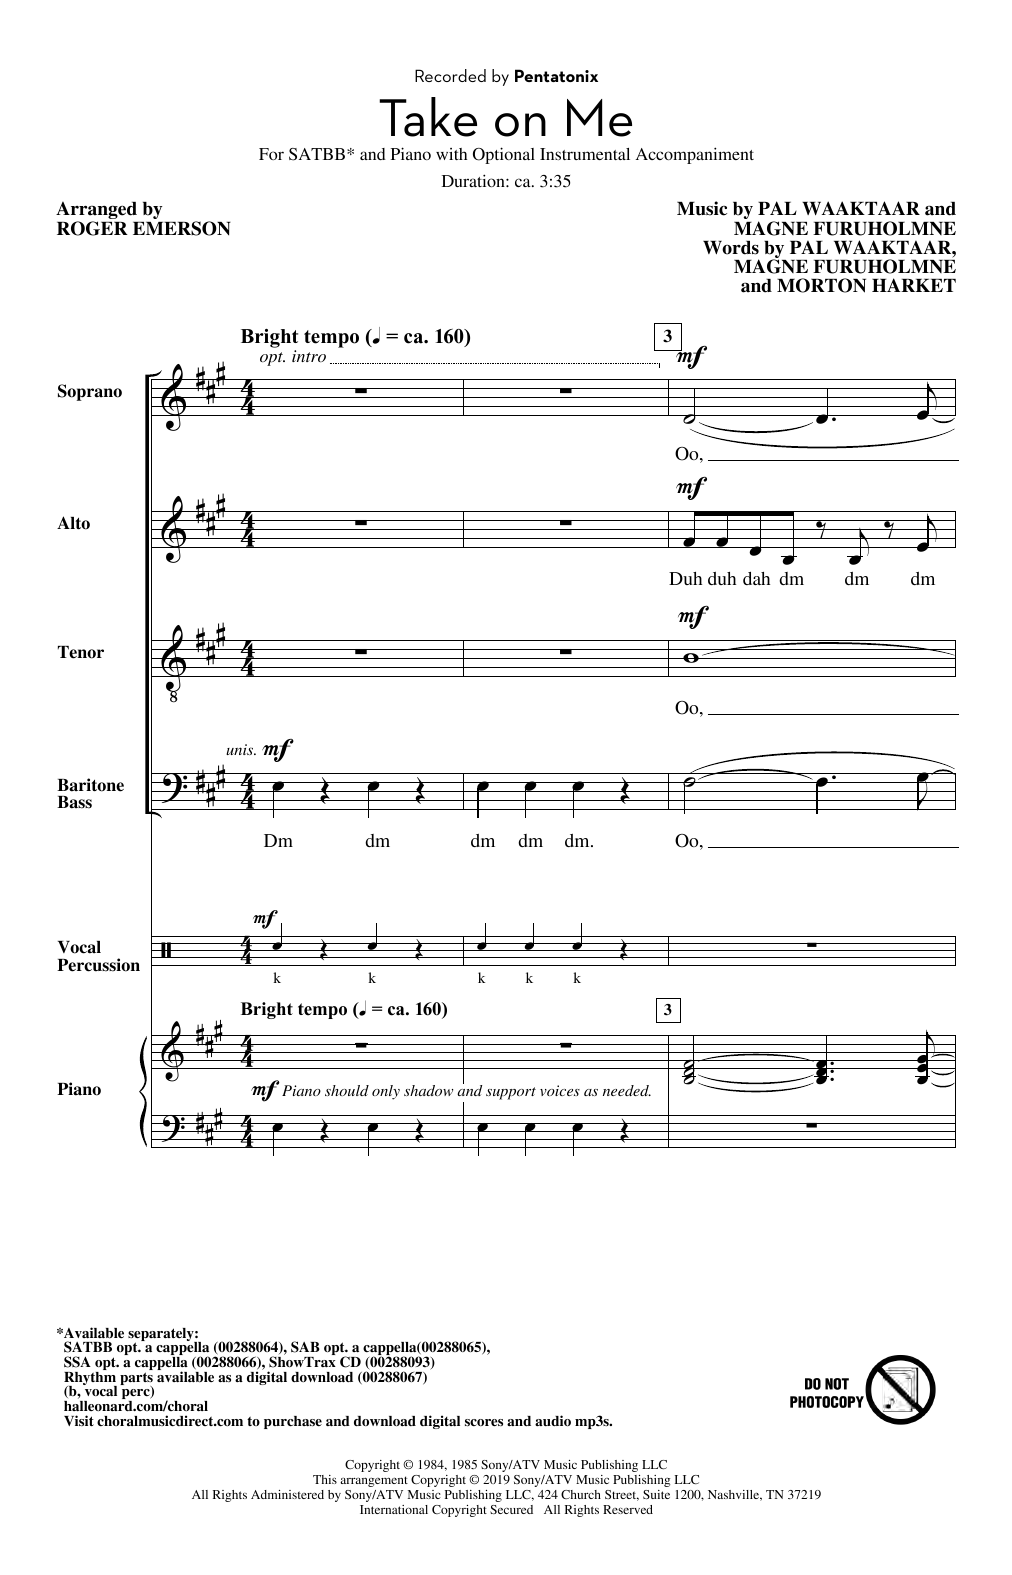 Download Pentatonix Take On Me (arr. Roger Emerson) Sheet Music